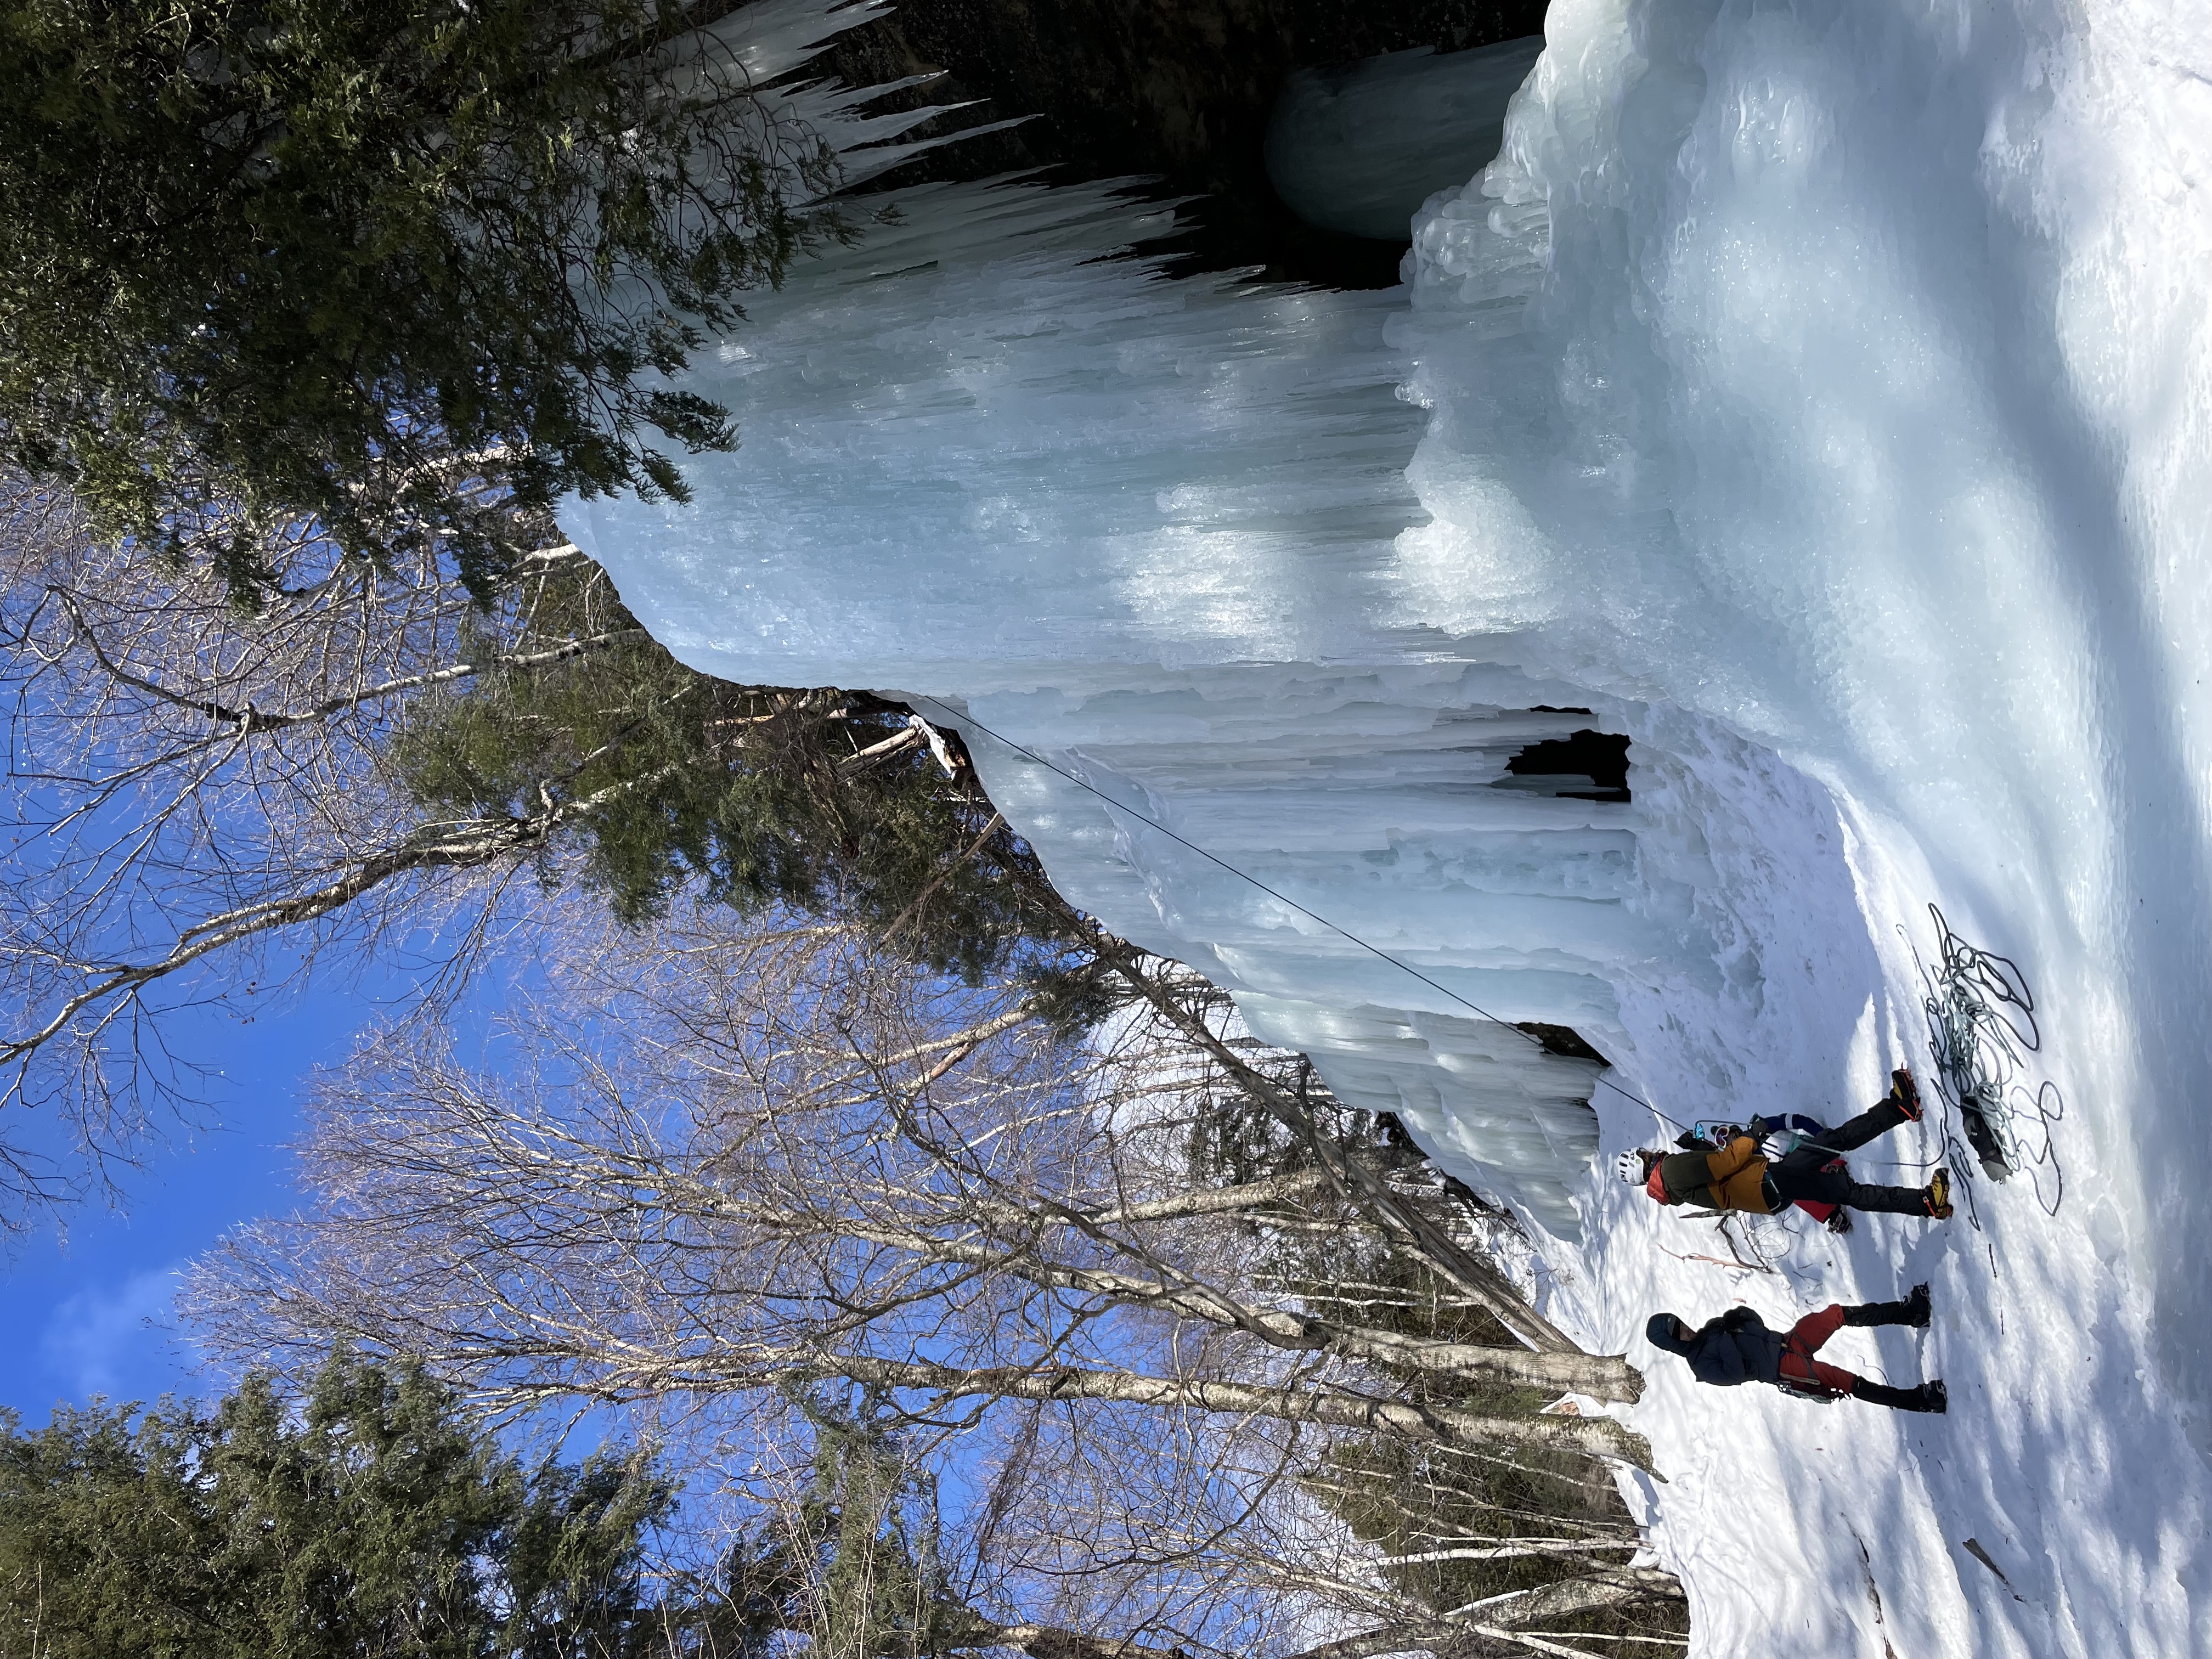 Group ice-climbing activity near Munising